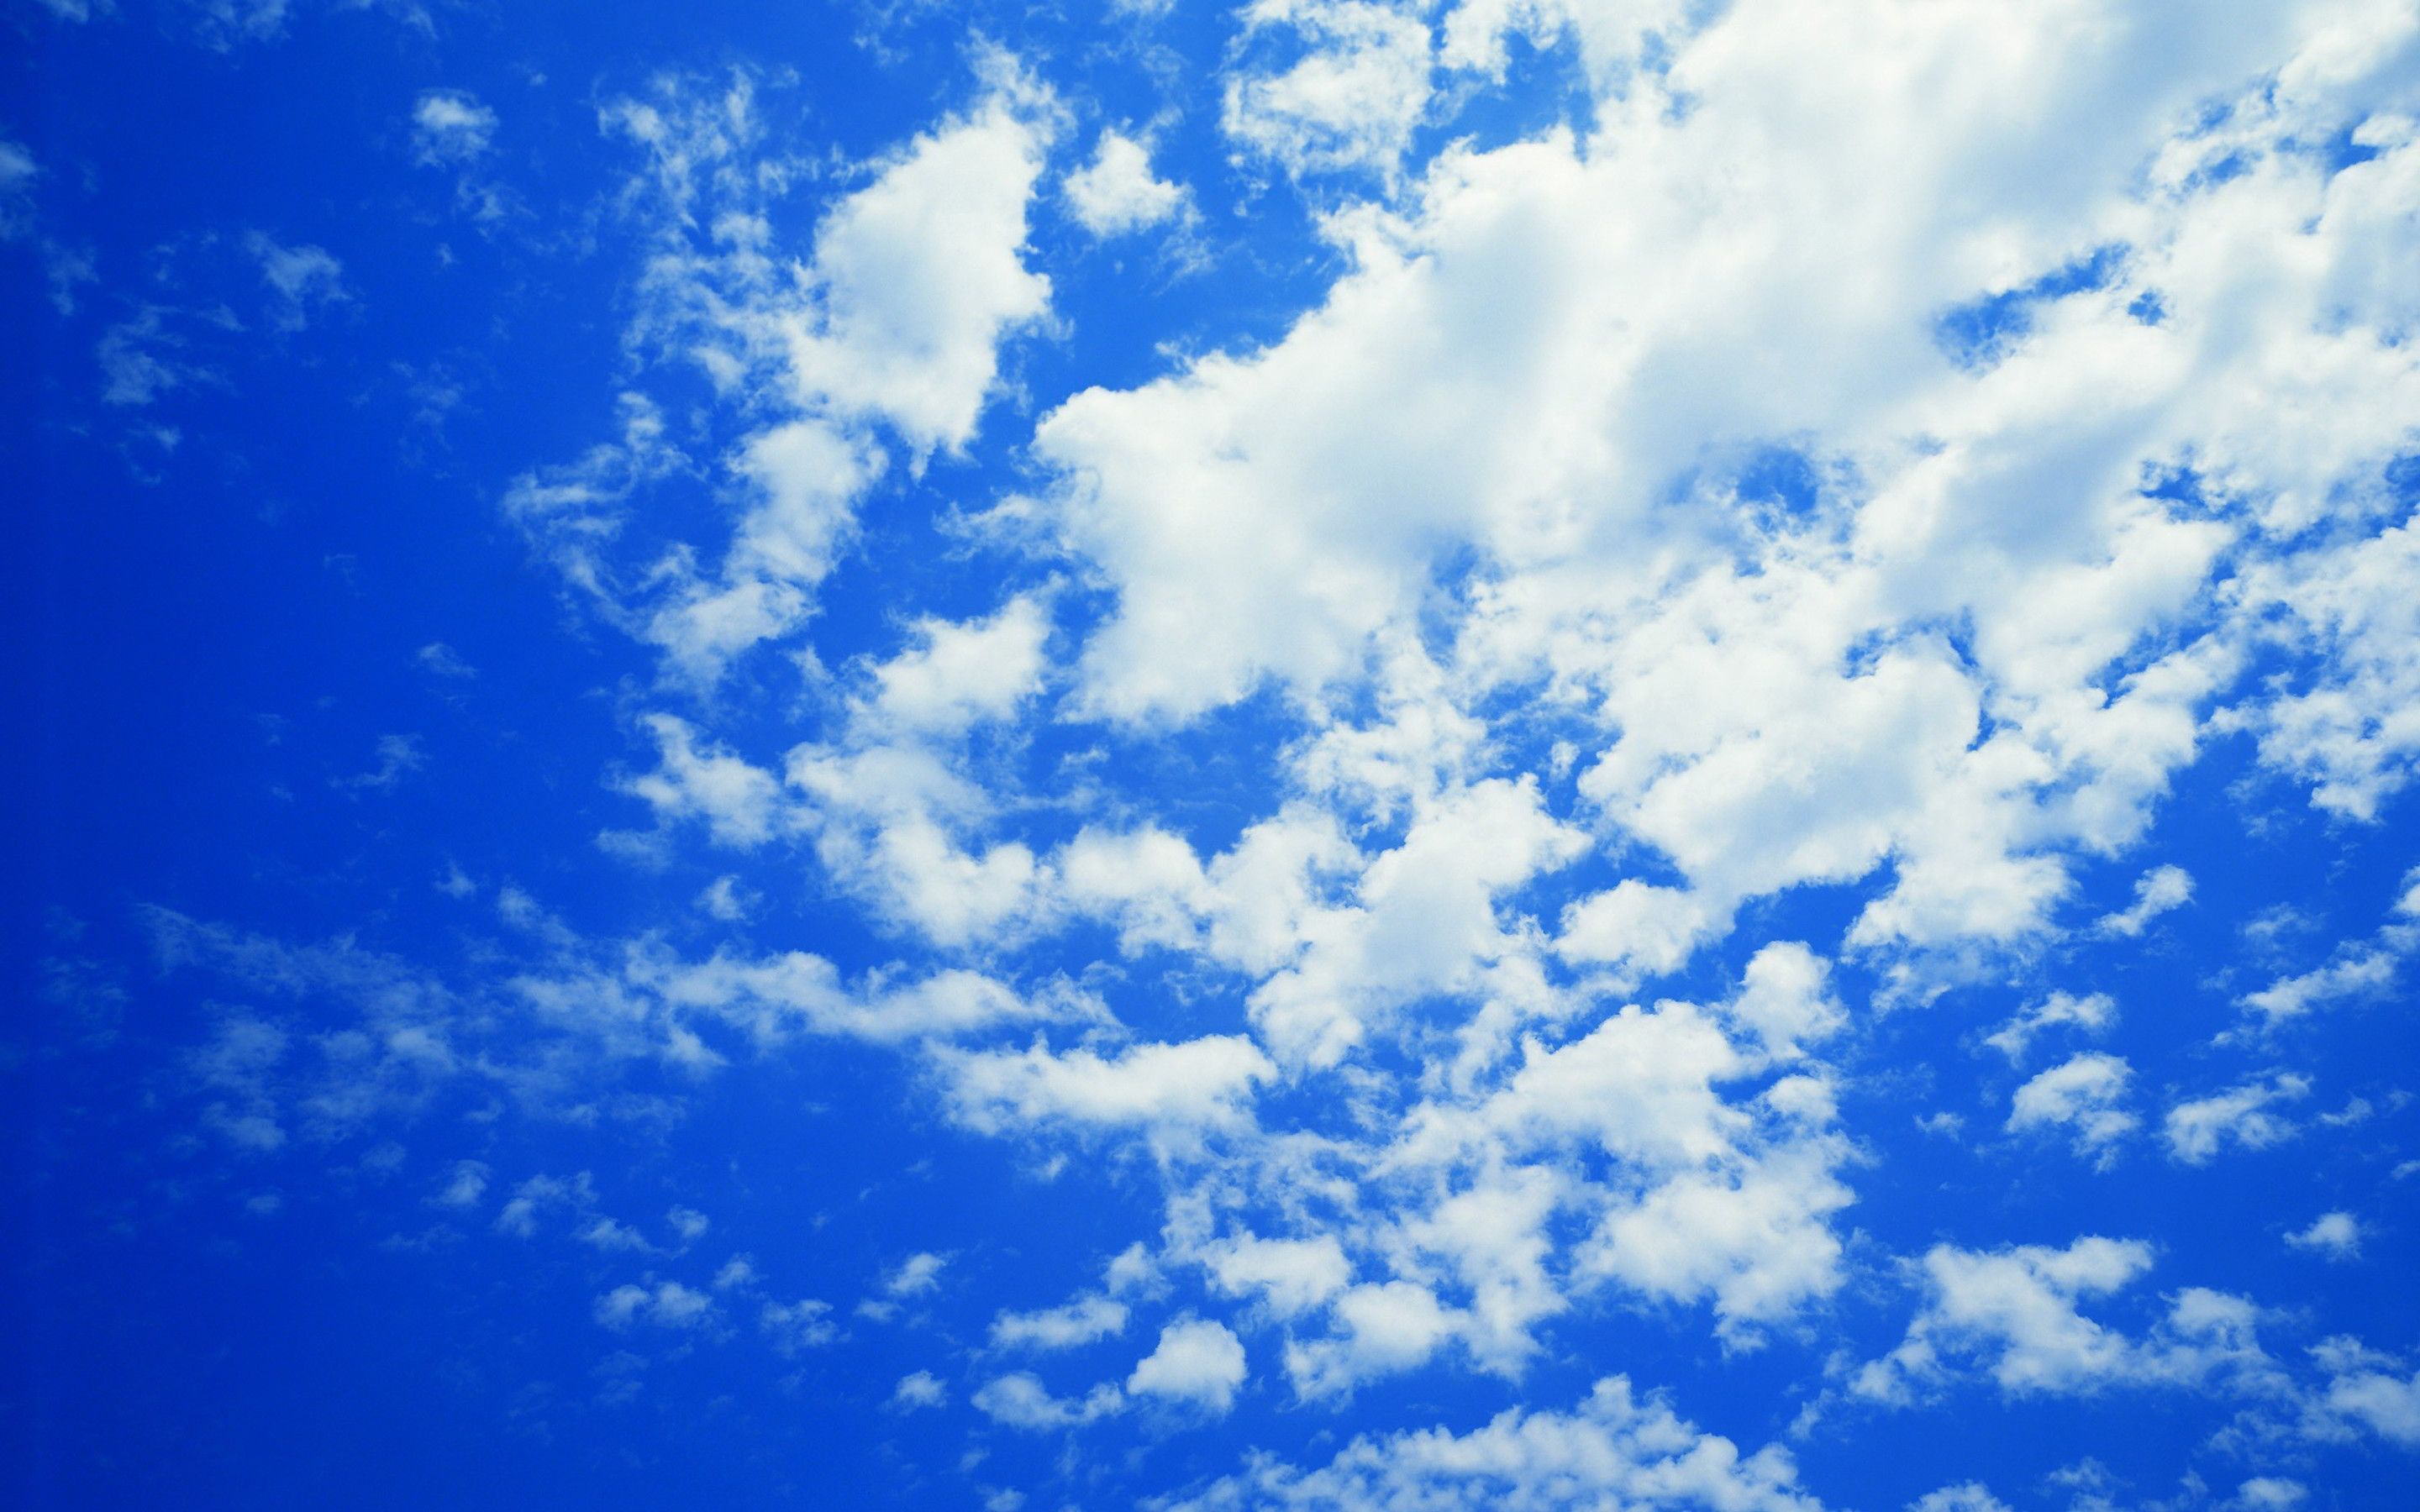 Blue Sky Clouds Wallpapers - Los mejores fondos de Blue Sky Clouds gratis